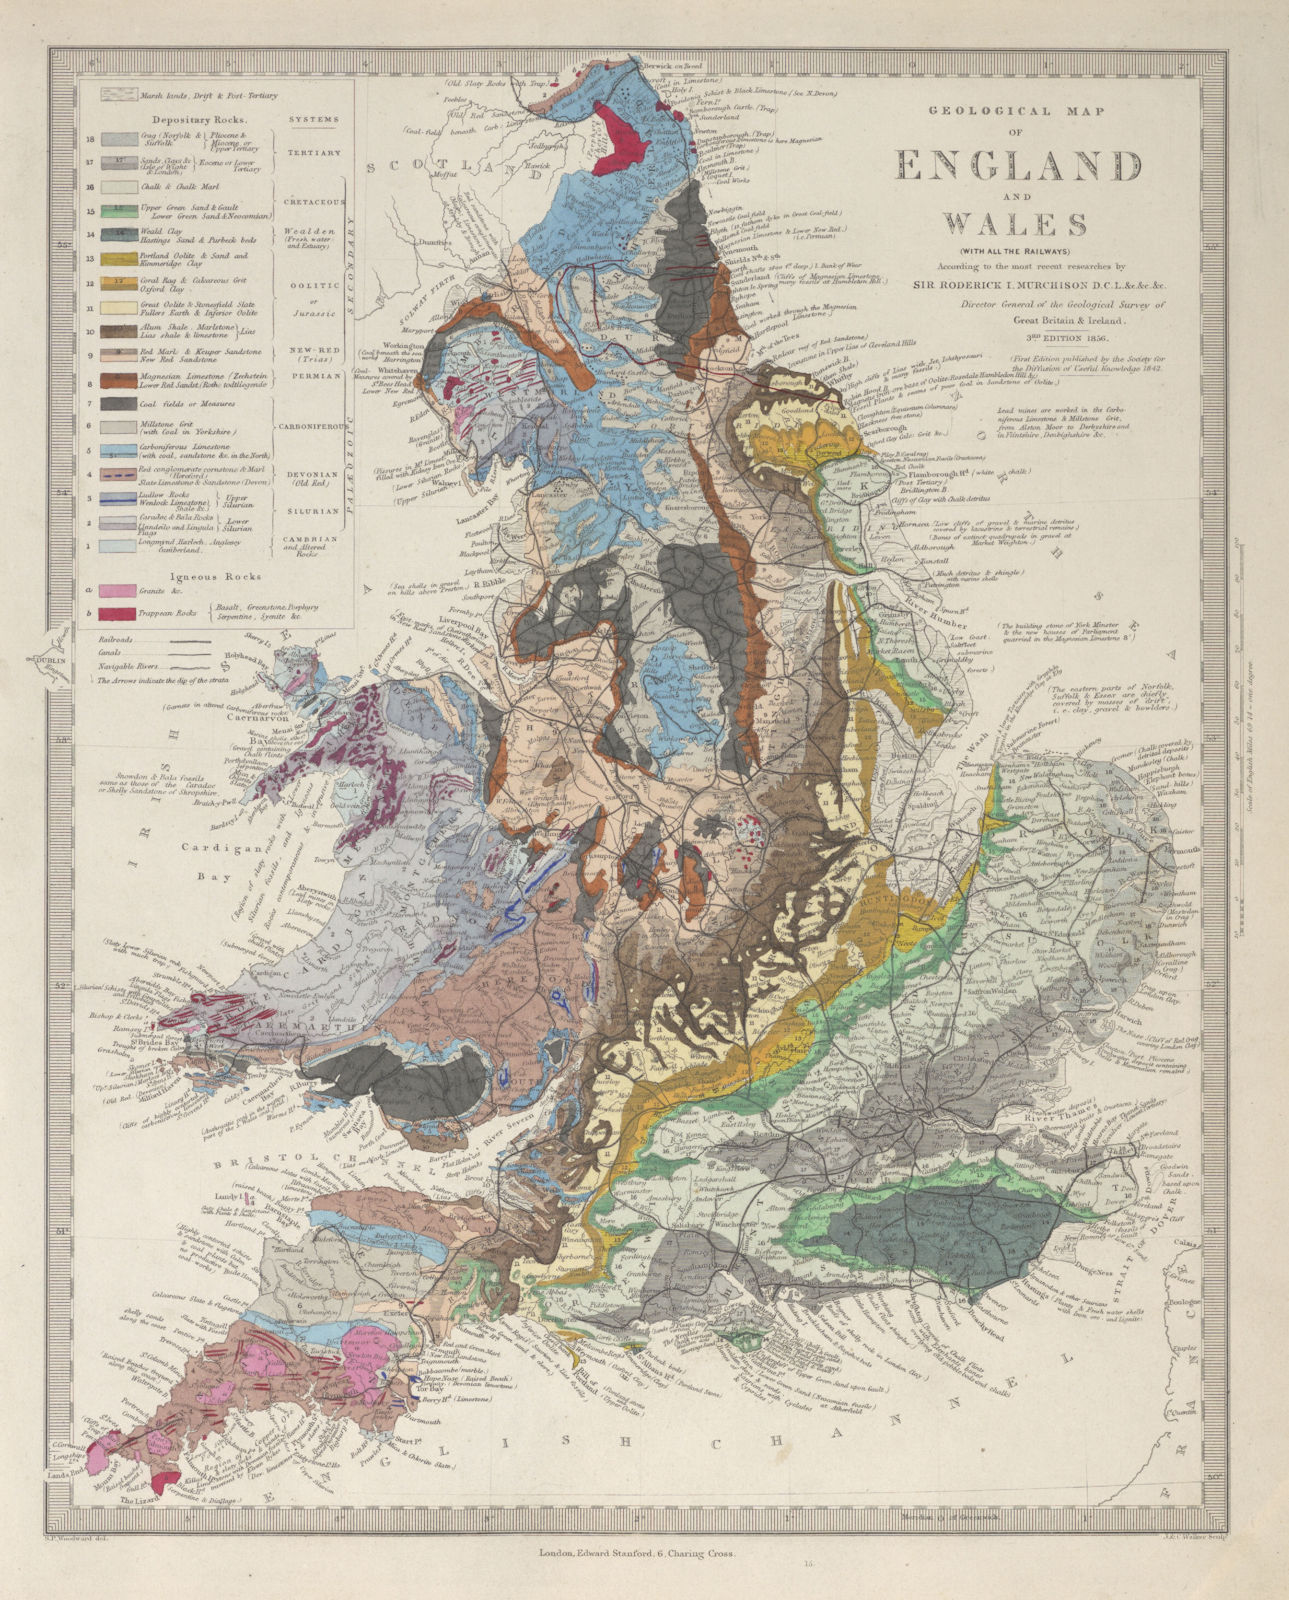 ENGLAND & WALES Geological Map. Original colour. Depositary rocks. SDUK 1857